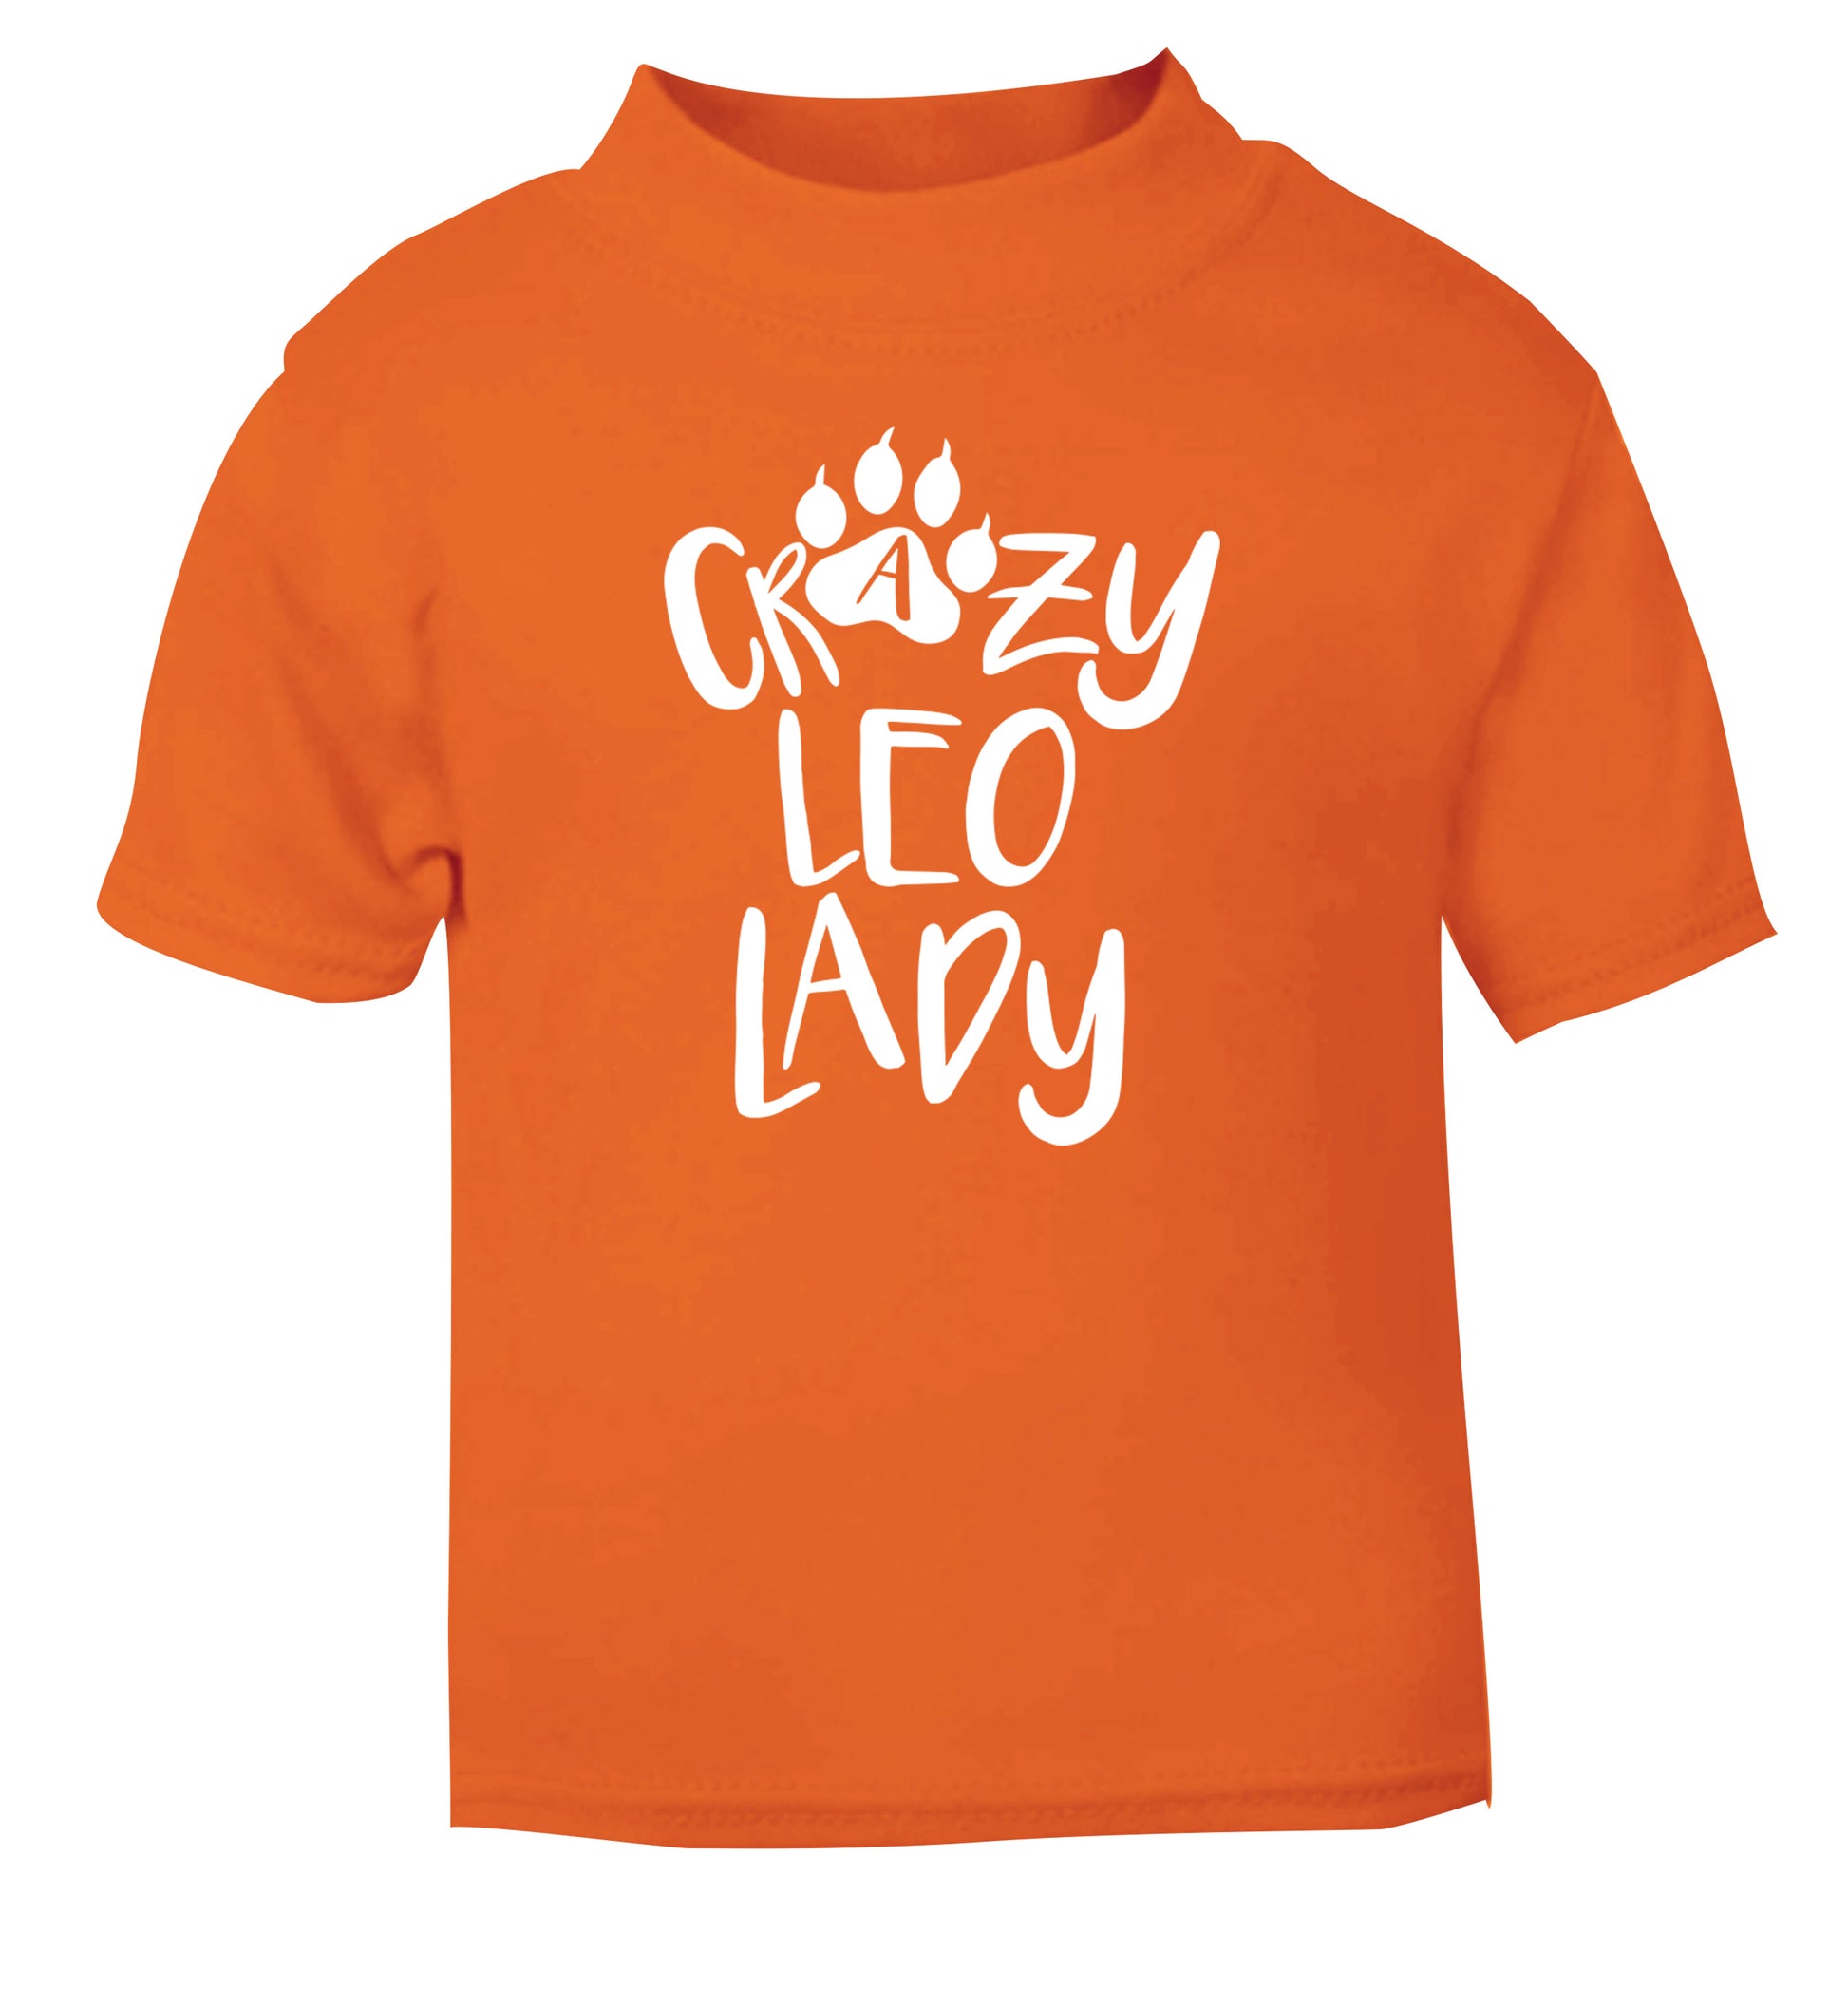 Crazy leo lady orange Baby Toddler Tshirt 2 Years